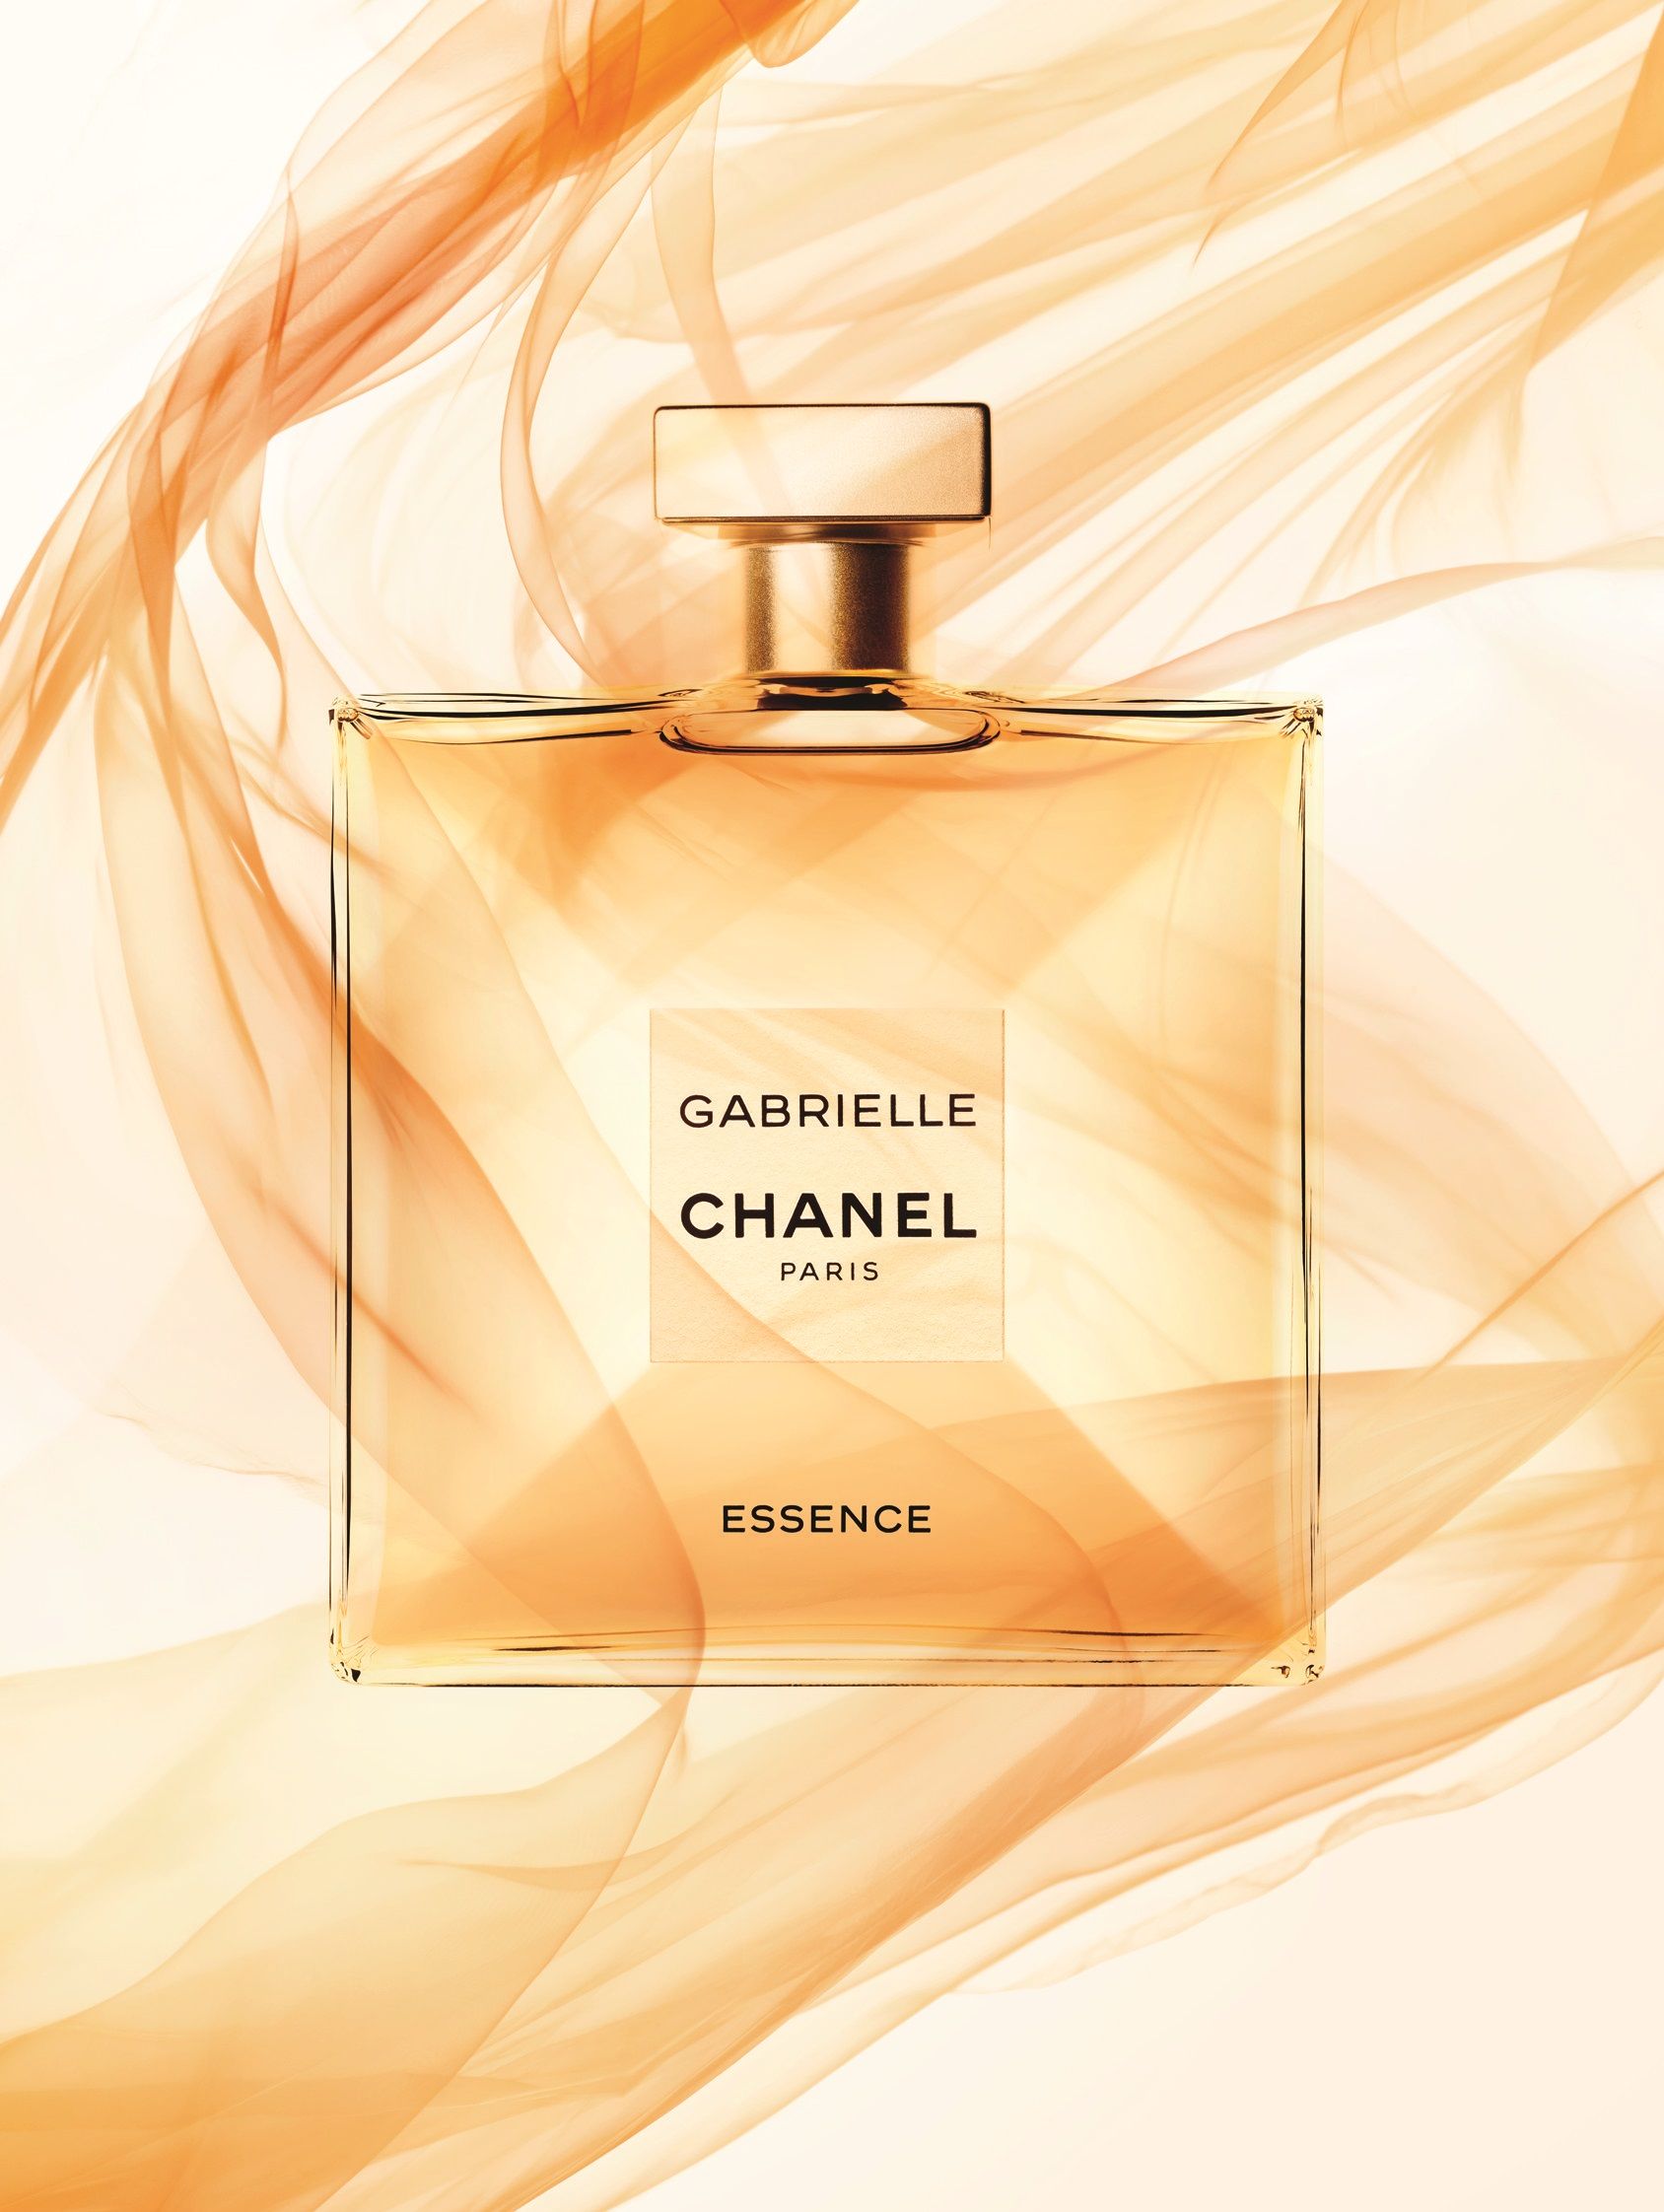 Chanel Gabrielle Essence EDP 1.5 ml ความหอมที่ผสมผสานความสดใสเข้ากับความหรูหราเย้ายวนเข้าด้วยกัน น้ำหอมกลิ่นฟลอรัลที่น่าหลงใหล เพื่อสร้างกลิ่นหอมที่อบอุ่นและอบอวล